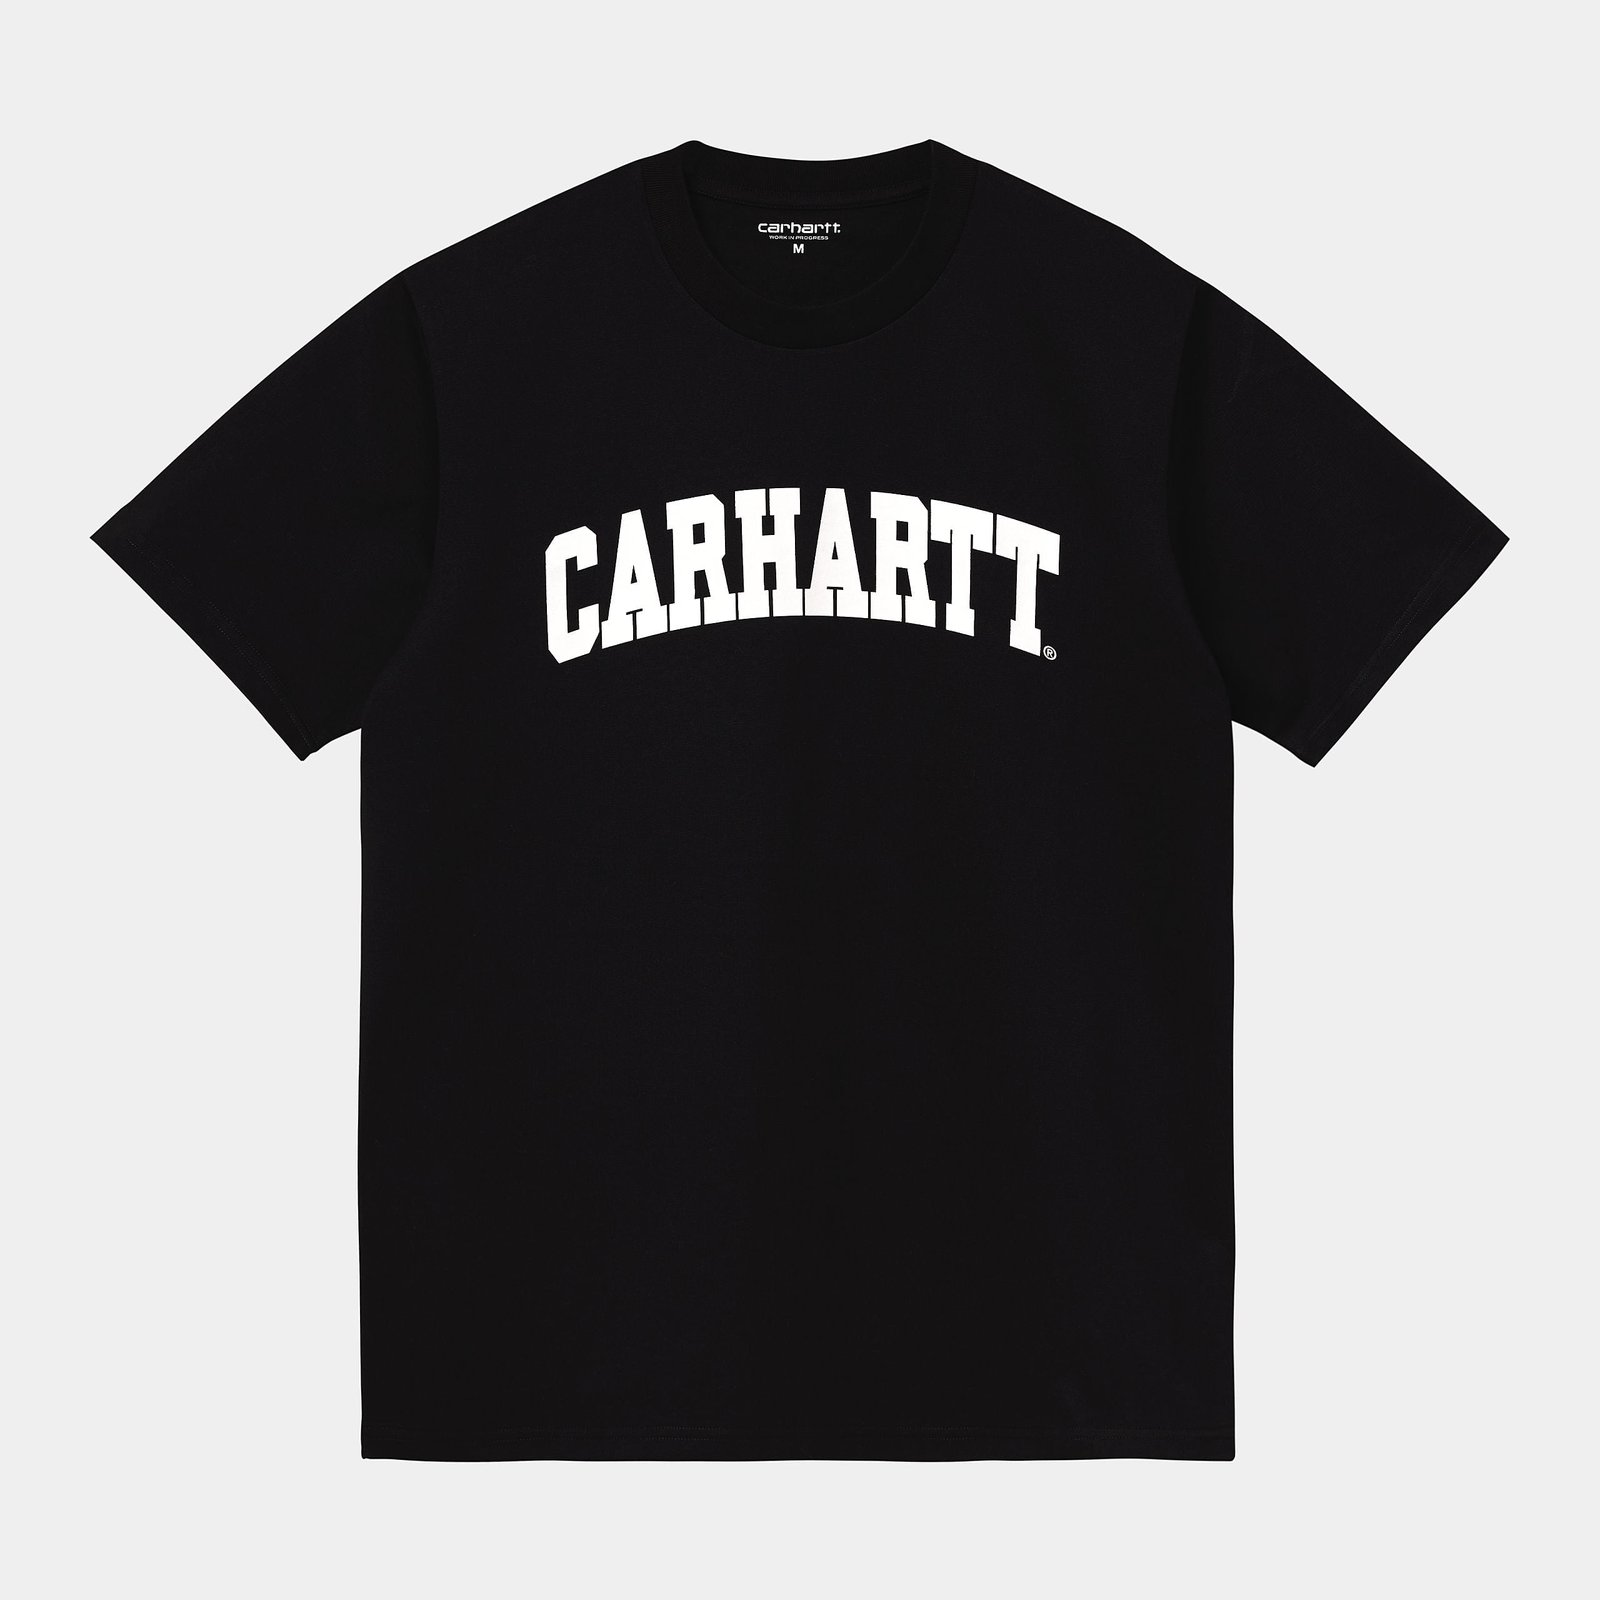 Built to Last: Carhartt's Quality Hoodies